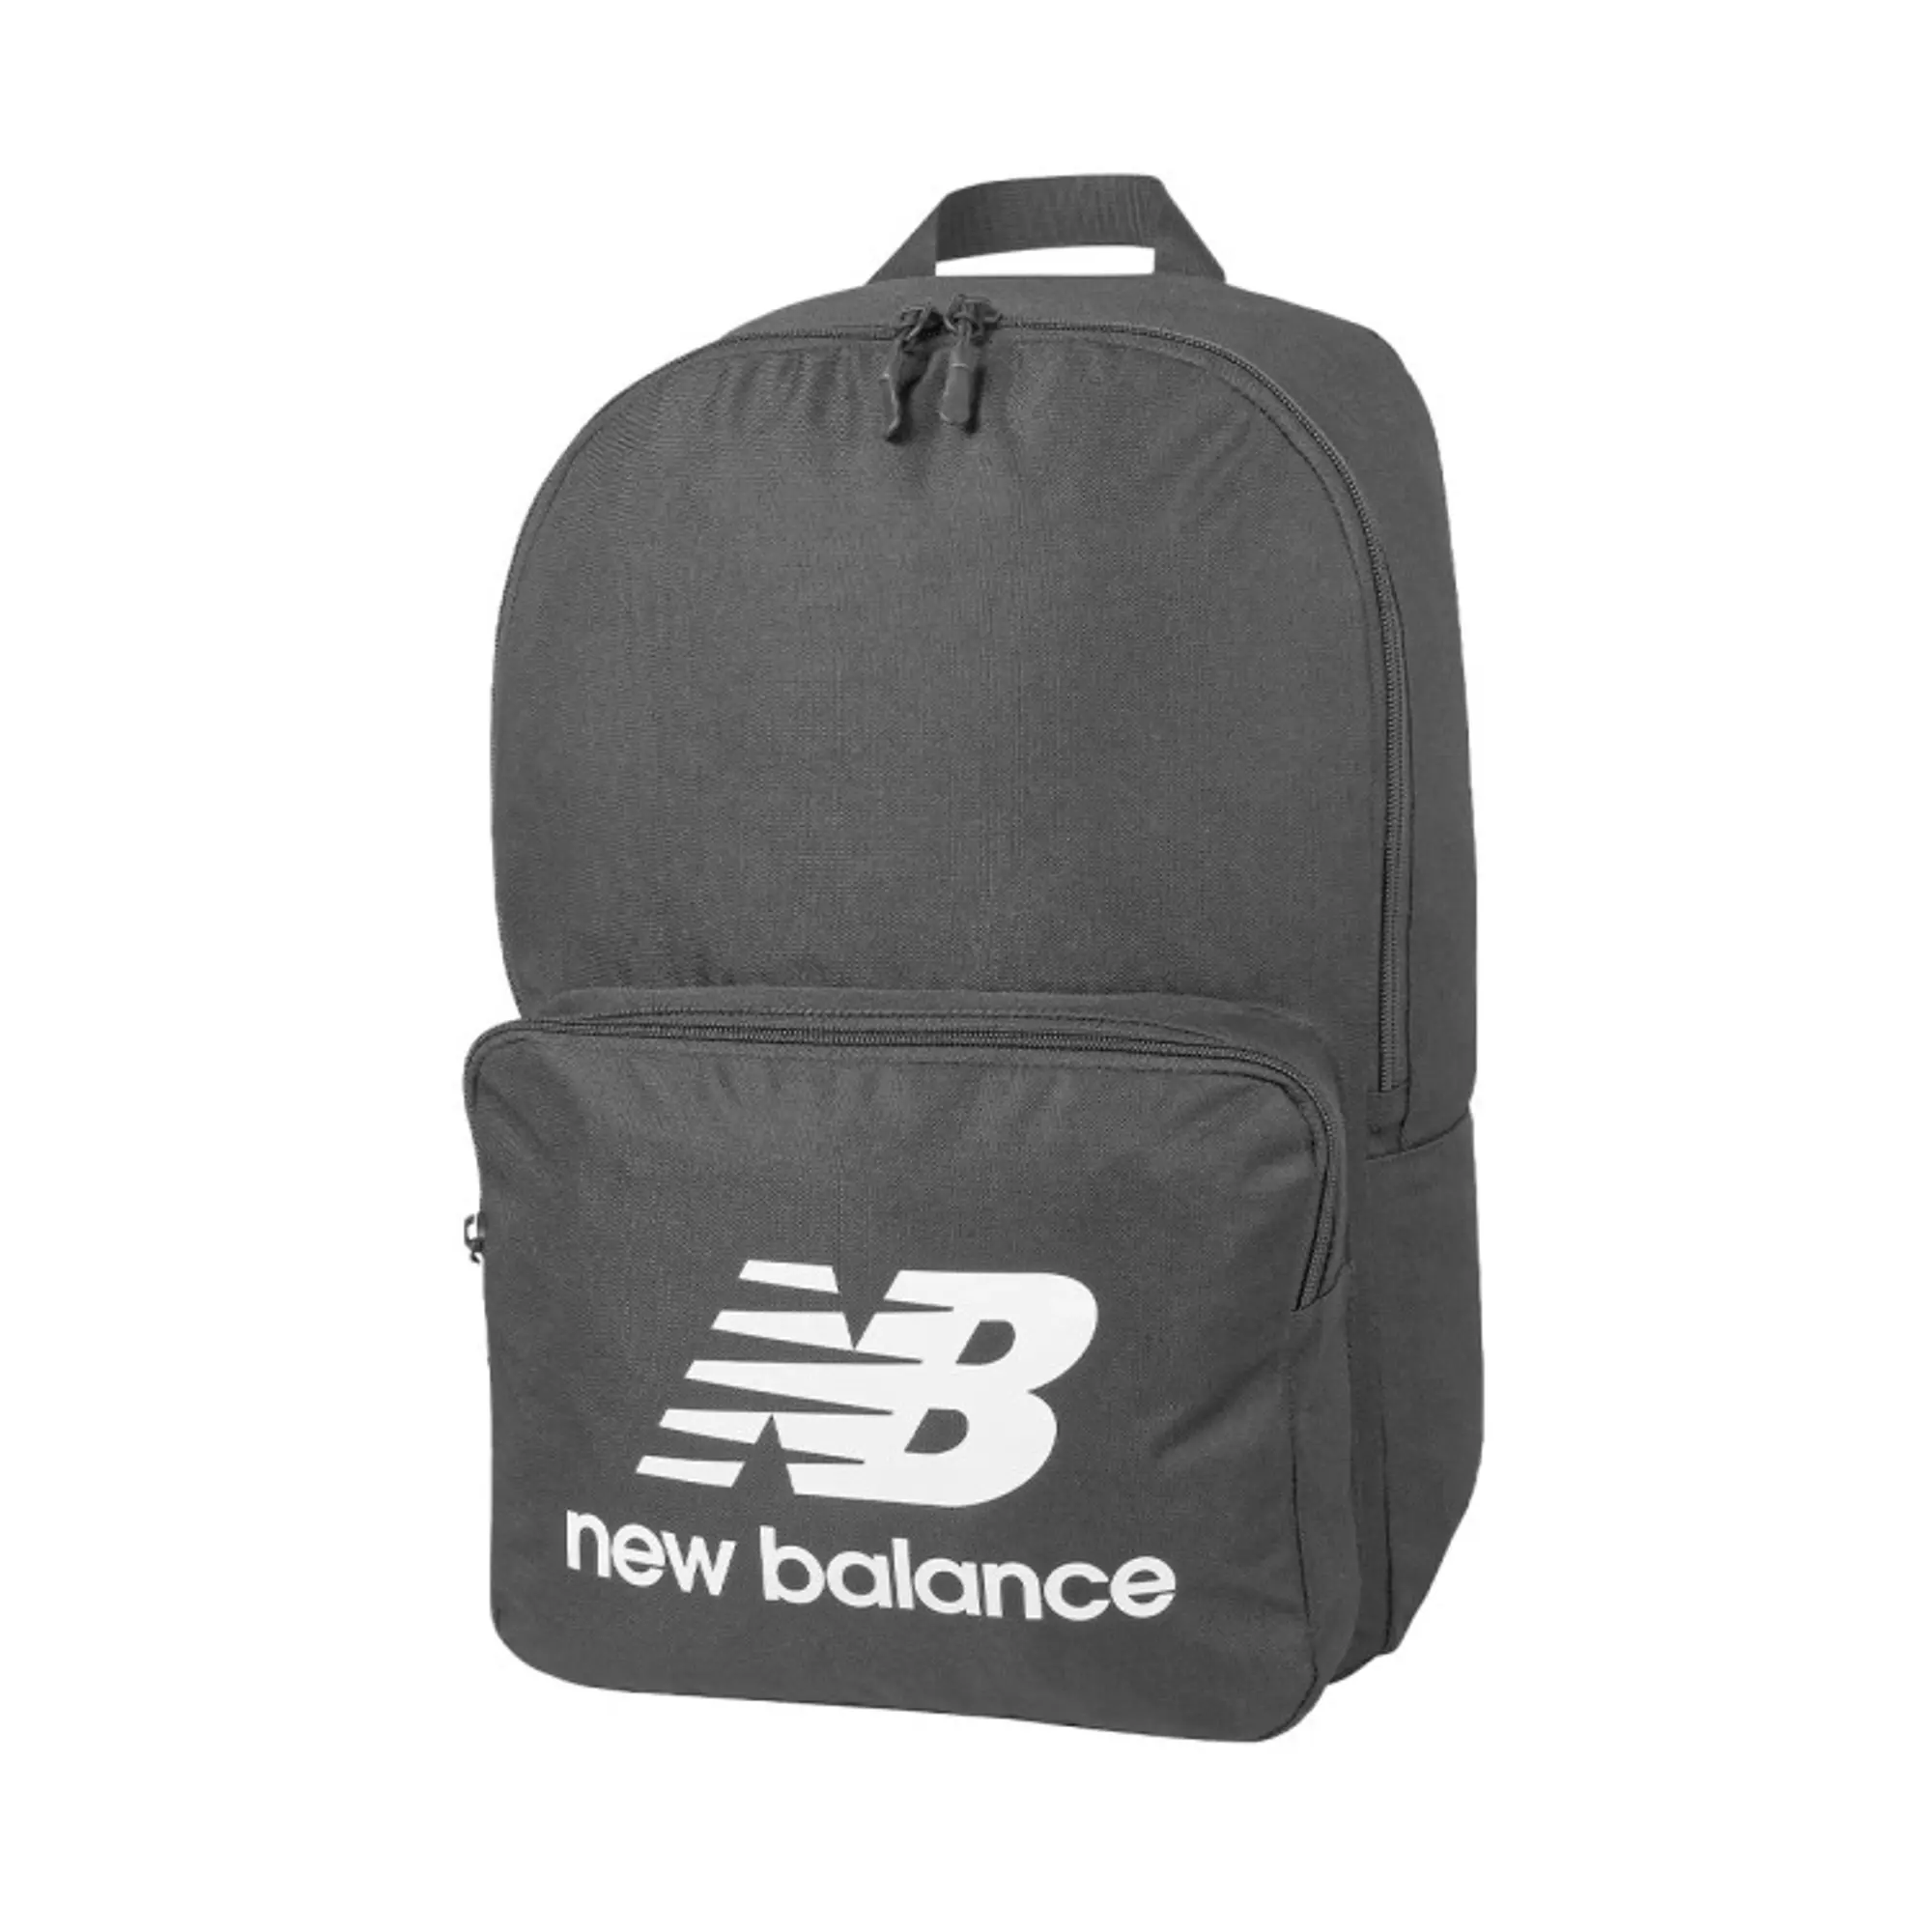 New Balance Unisex Team Classic Backpack in Black/Noir/White/blanc Polyester